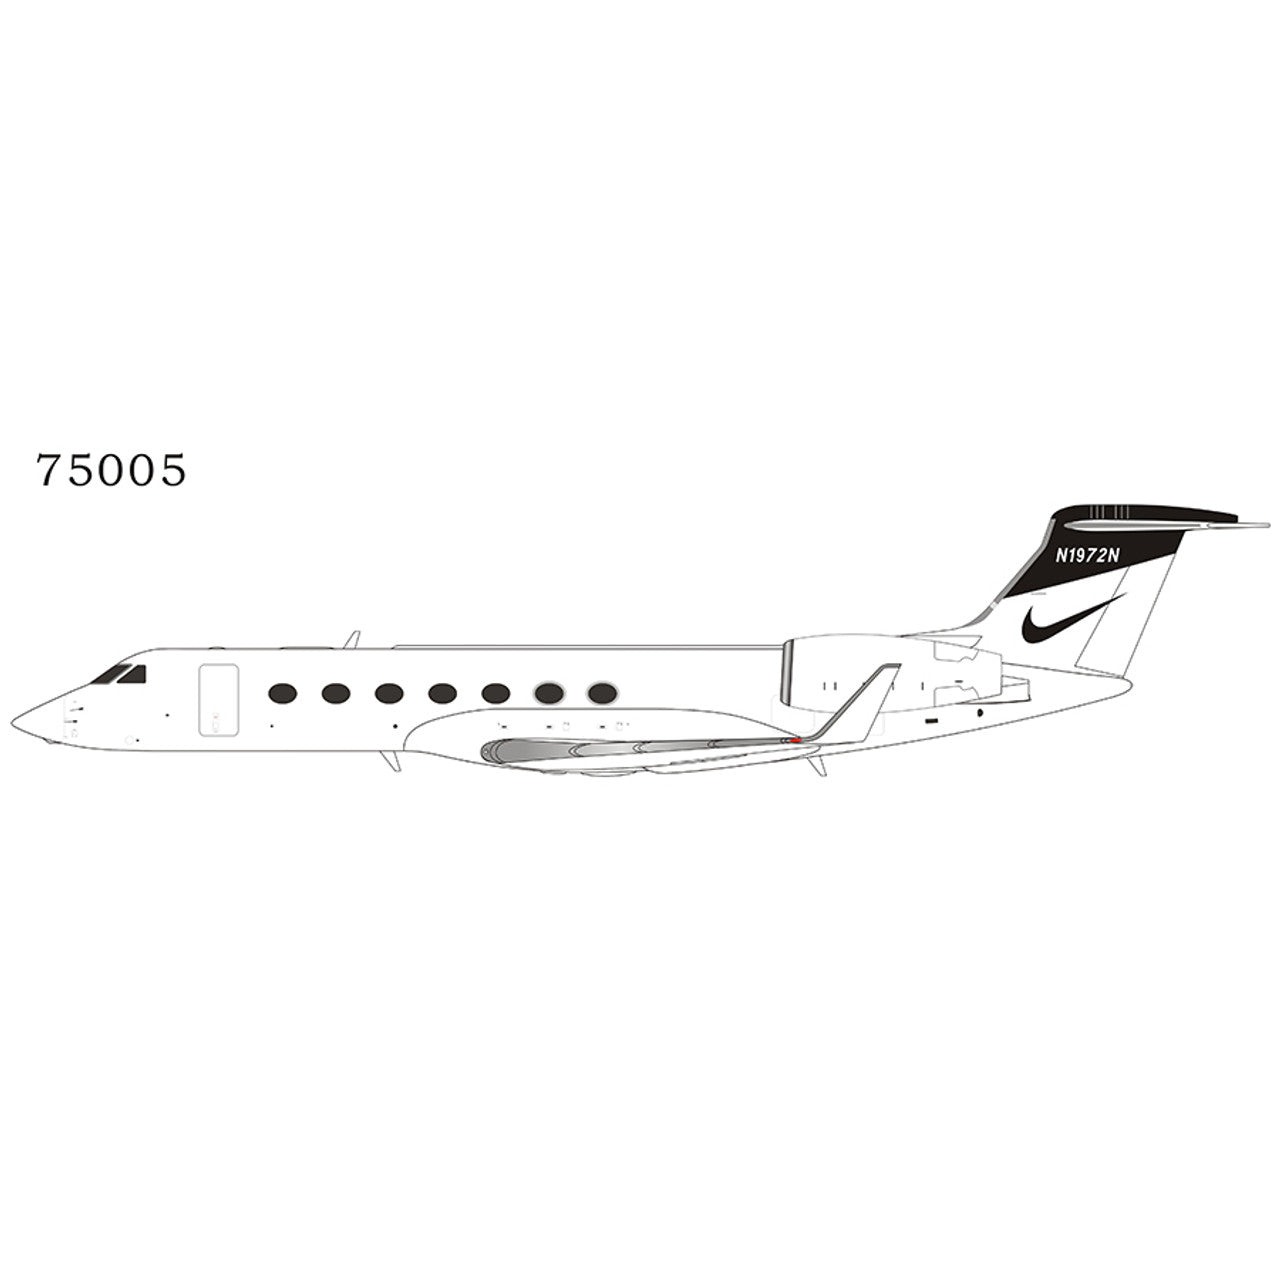 1:200 NG Models NIKE Gulfstream G550 "2019 Livery" N1972N NG75005